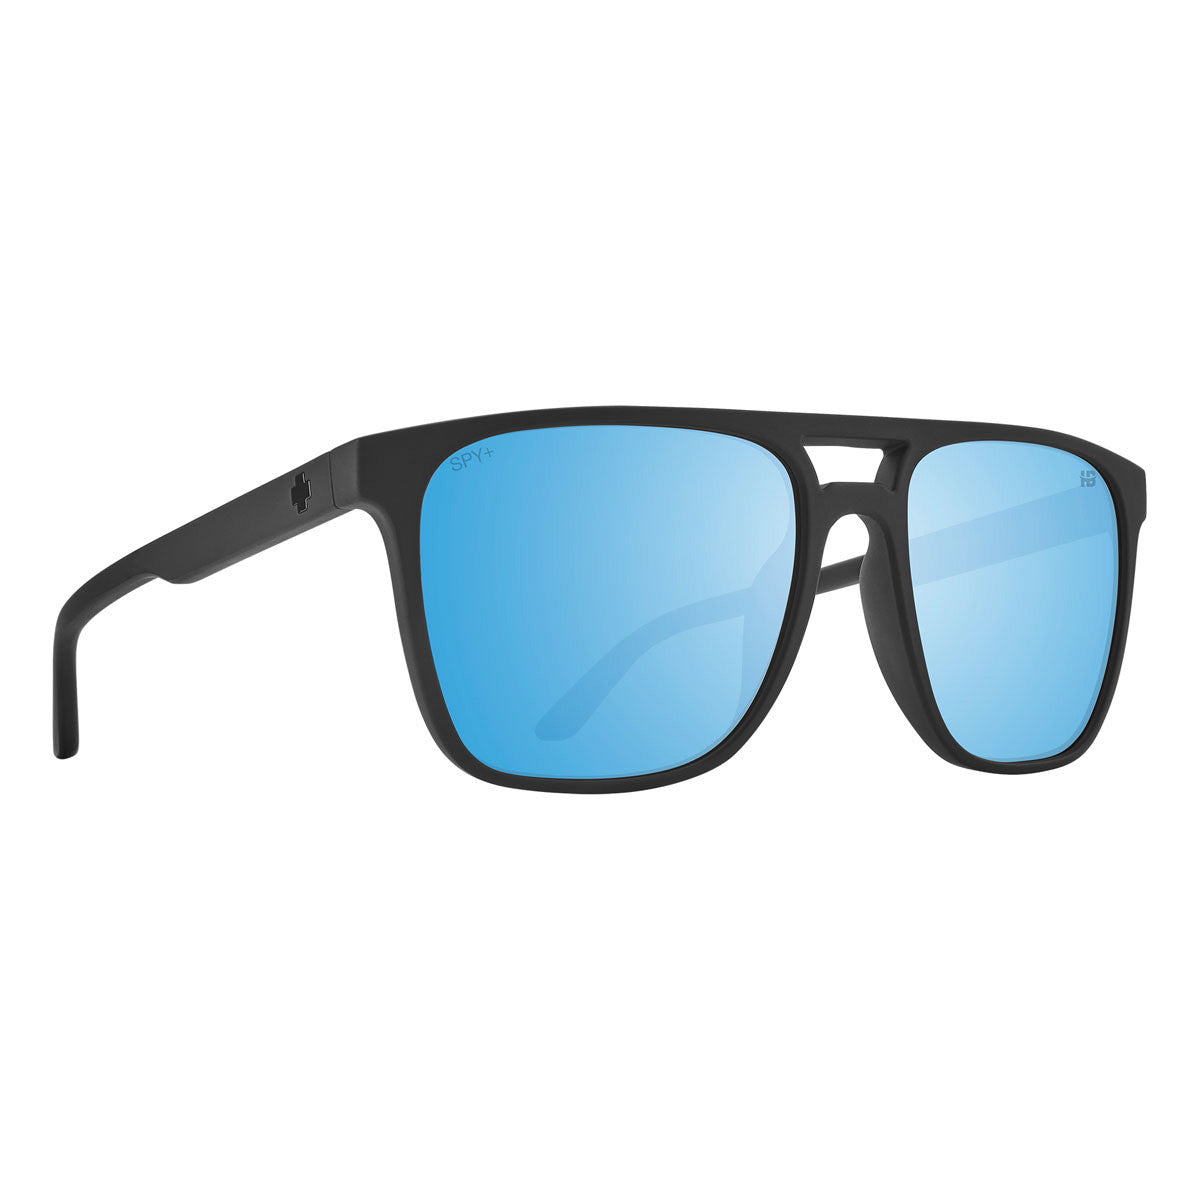 Spy Genre Sunglasses - Matte Black - Happy Gray Polar